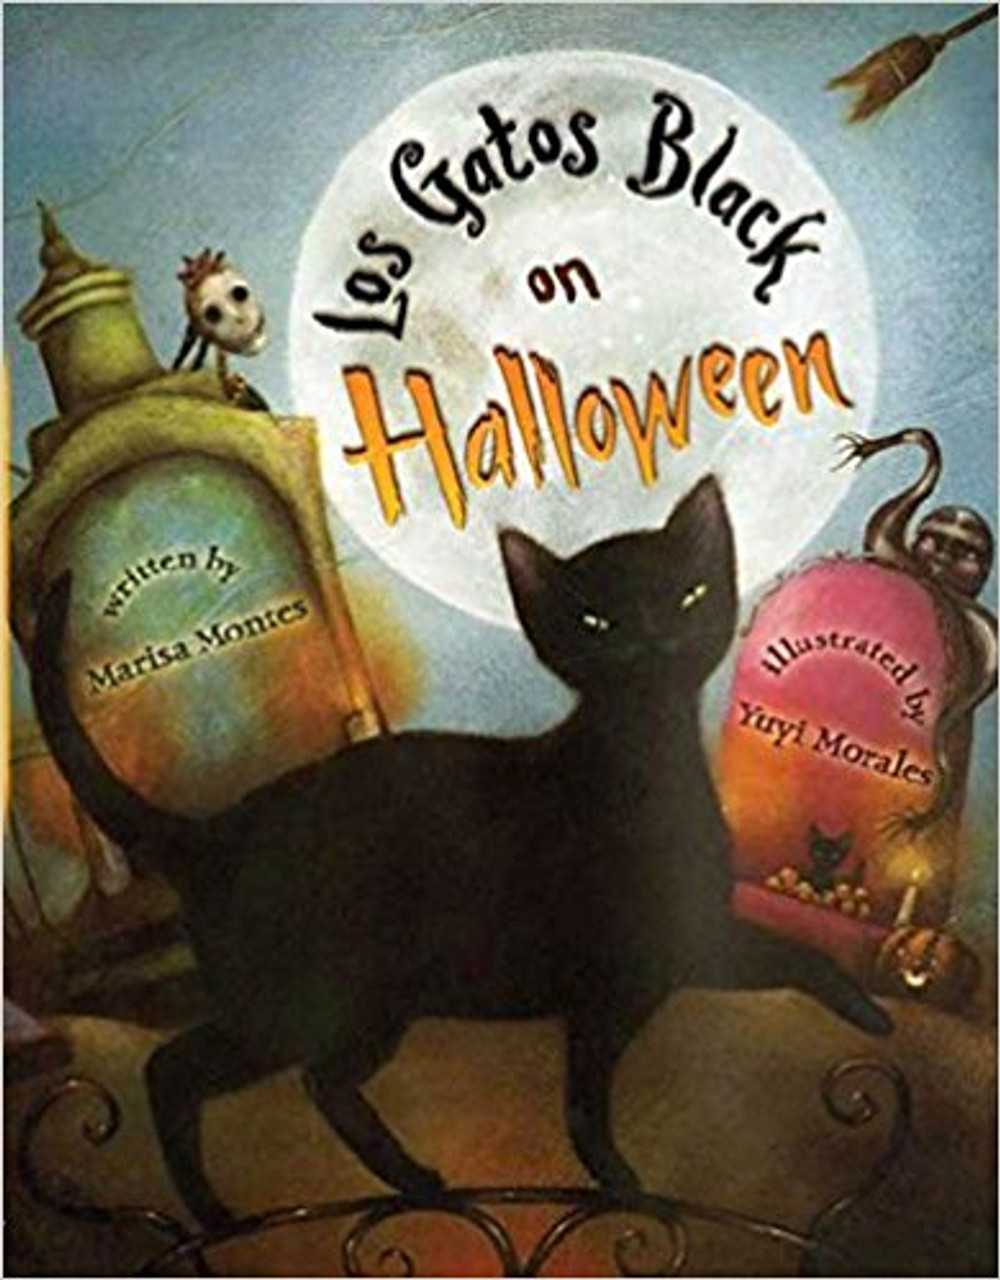 Los Gatos Black on Halloween (Hardcover) by Marisa Montes 